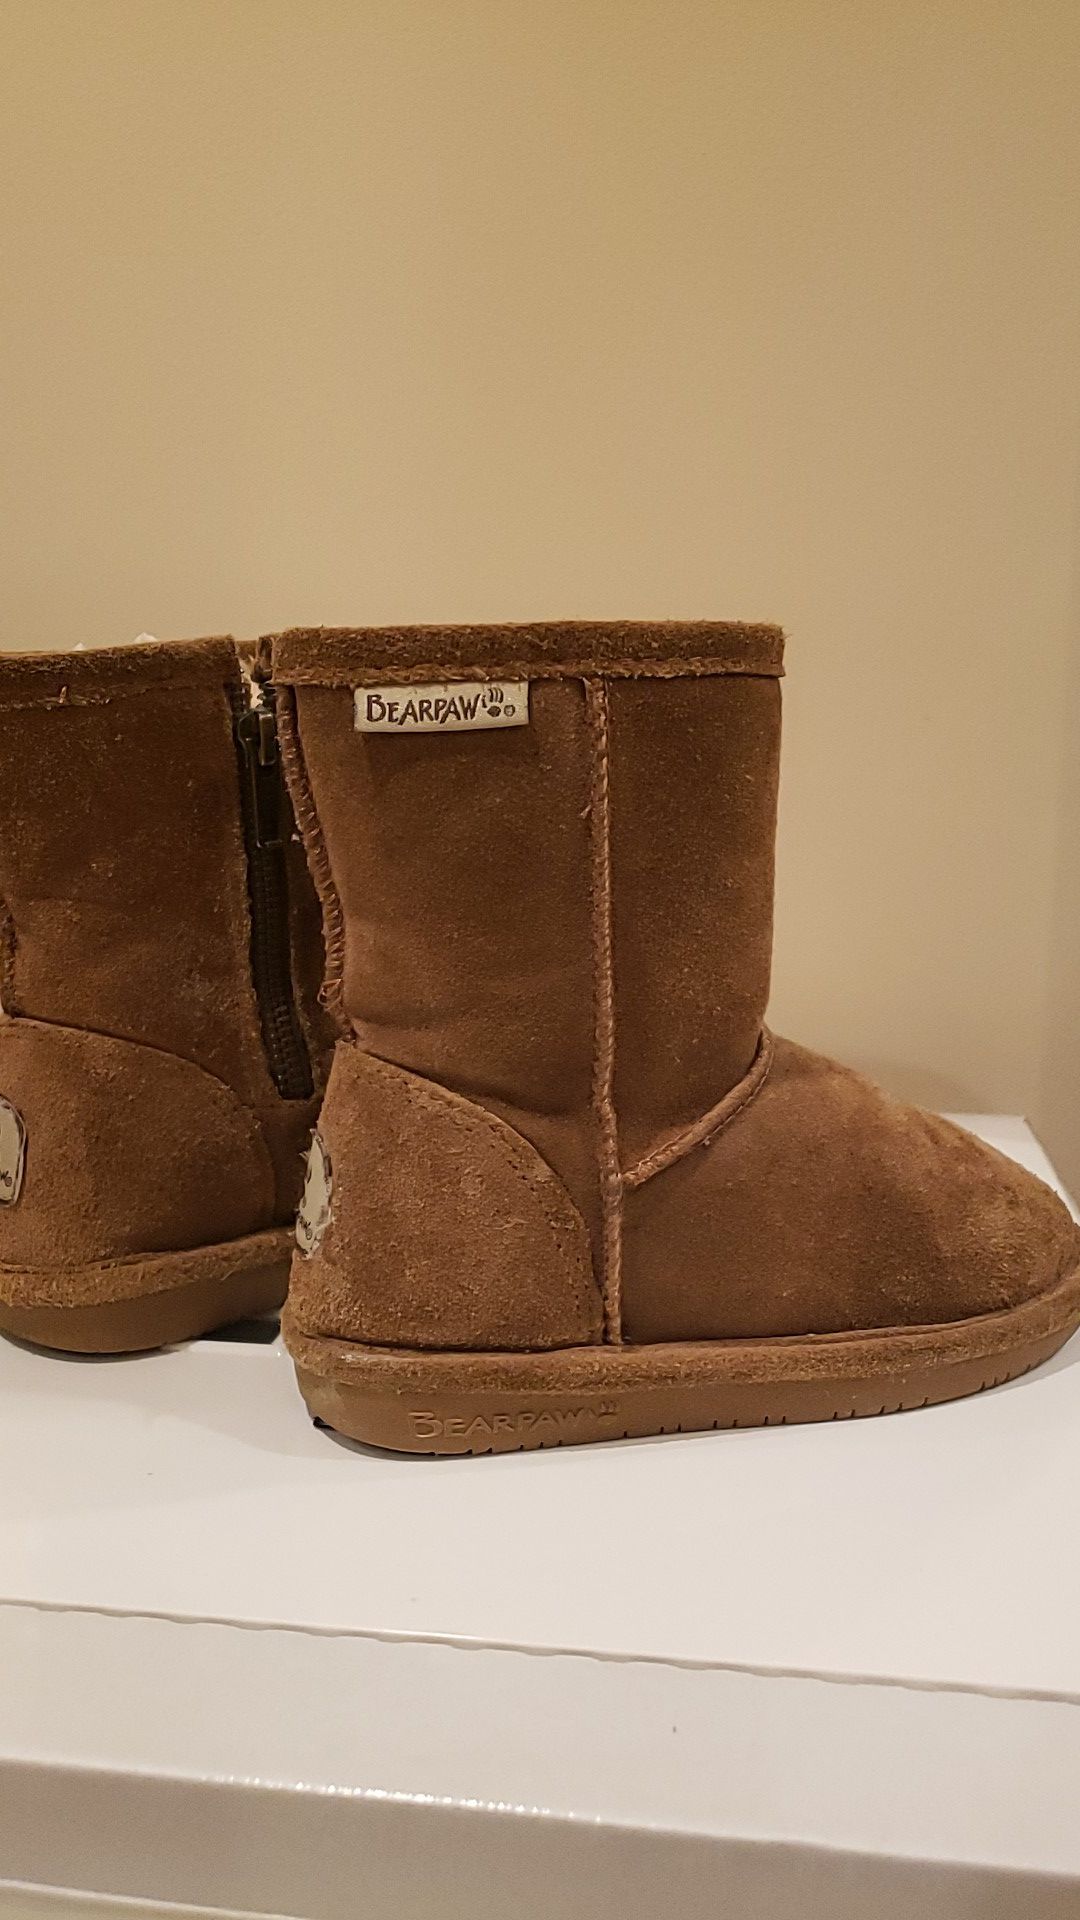 Size 10 Girl boots. Bearpaw brand